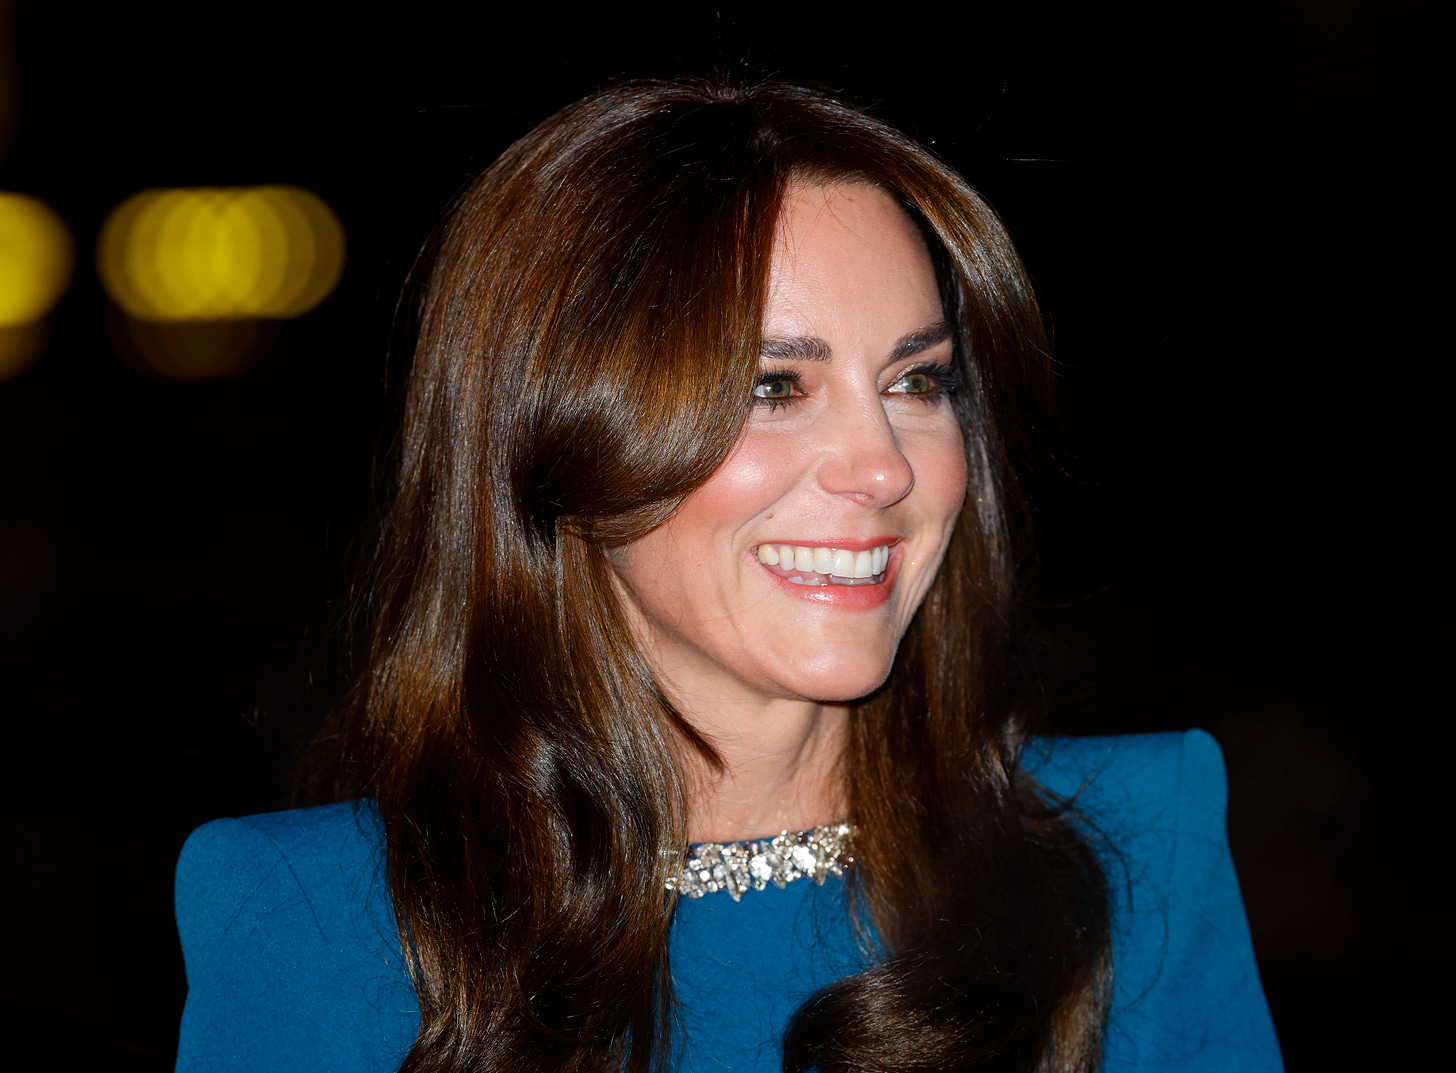 Kate Middleton wearing blue dress and glamorous makeup for Royal Variety Performance